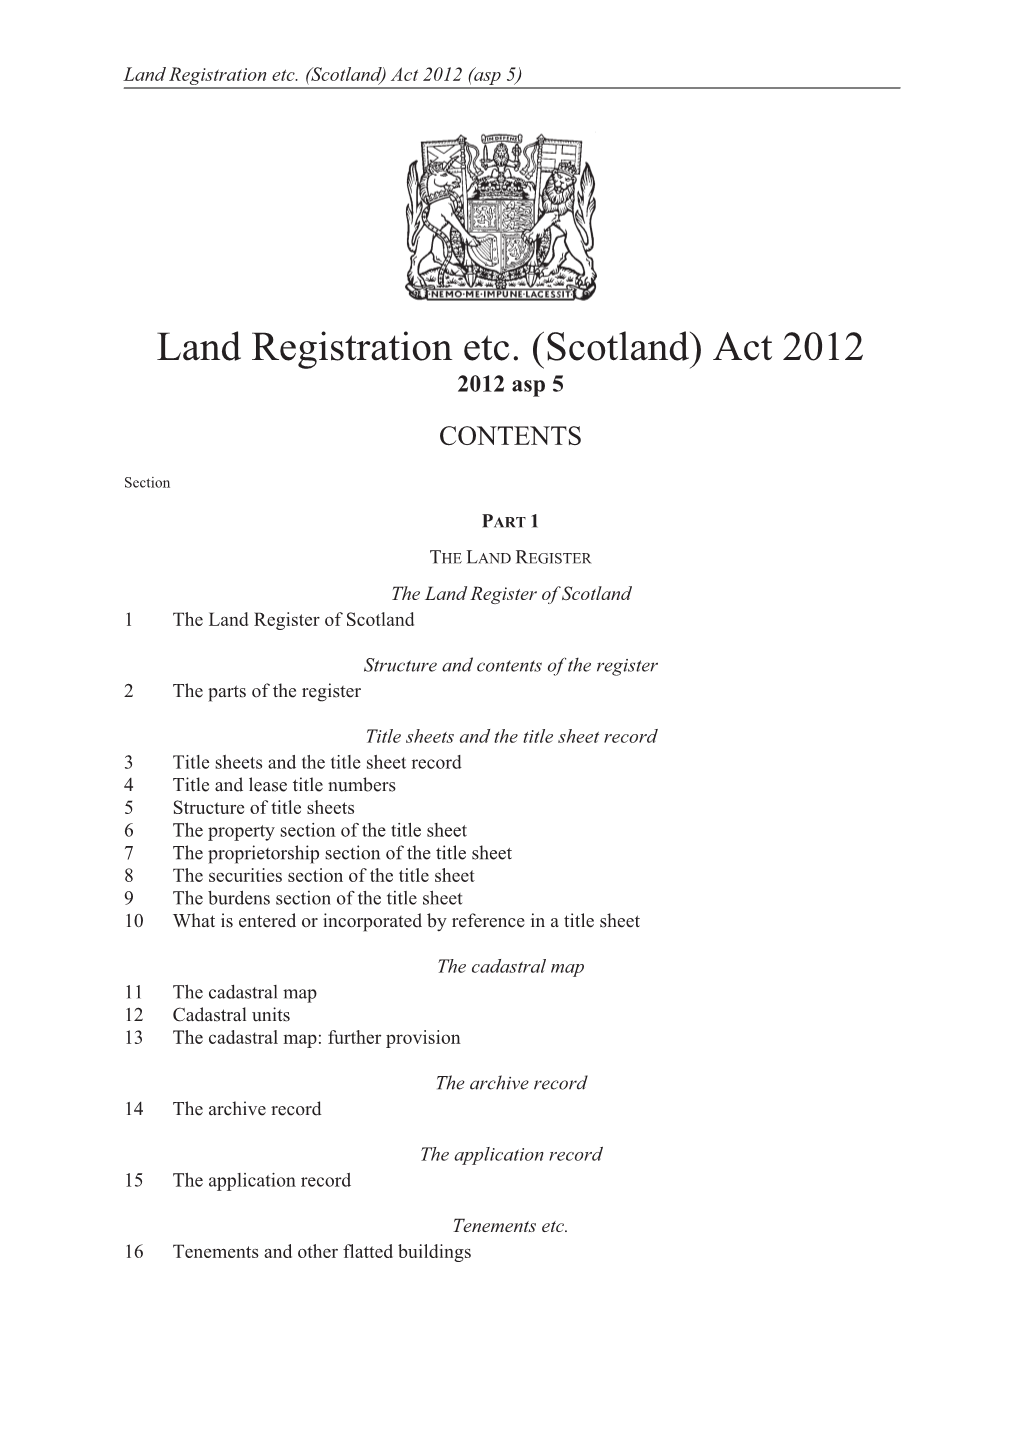 Land Registration Etc. (Scotland) Act 2012 (Asp 5)